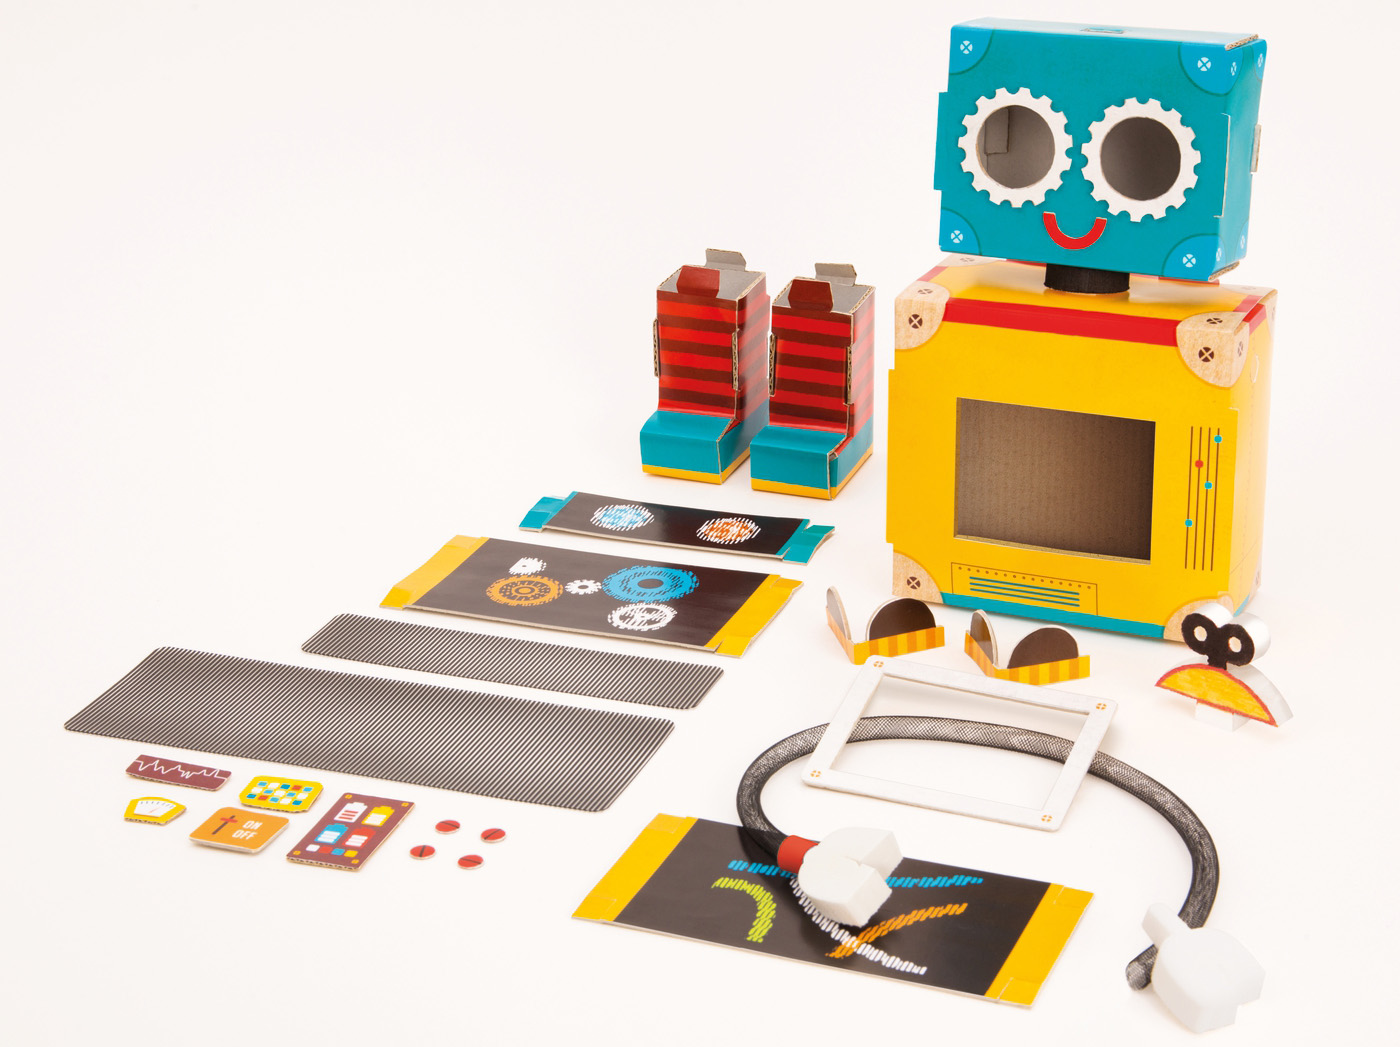 Clementoni Cardboard Fun Robot - Click to Enlarge